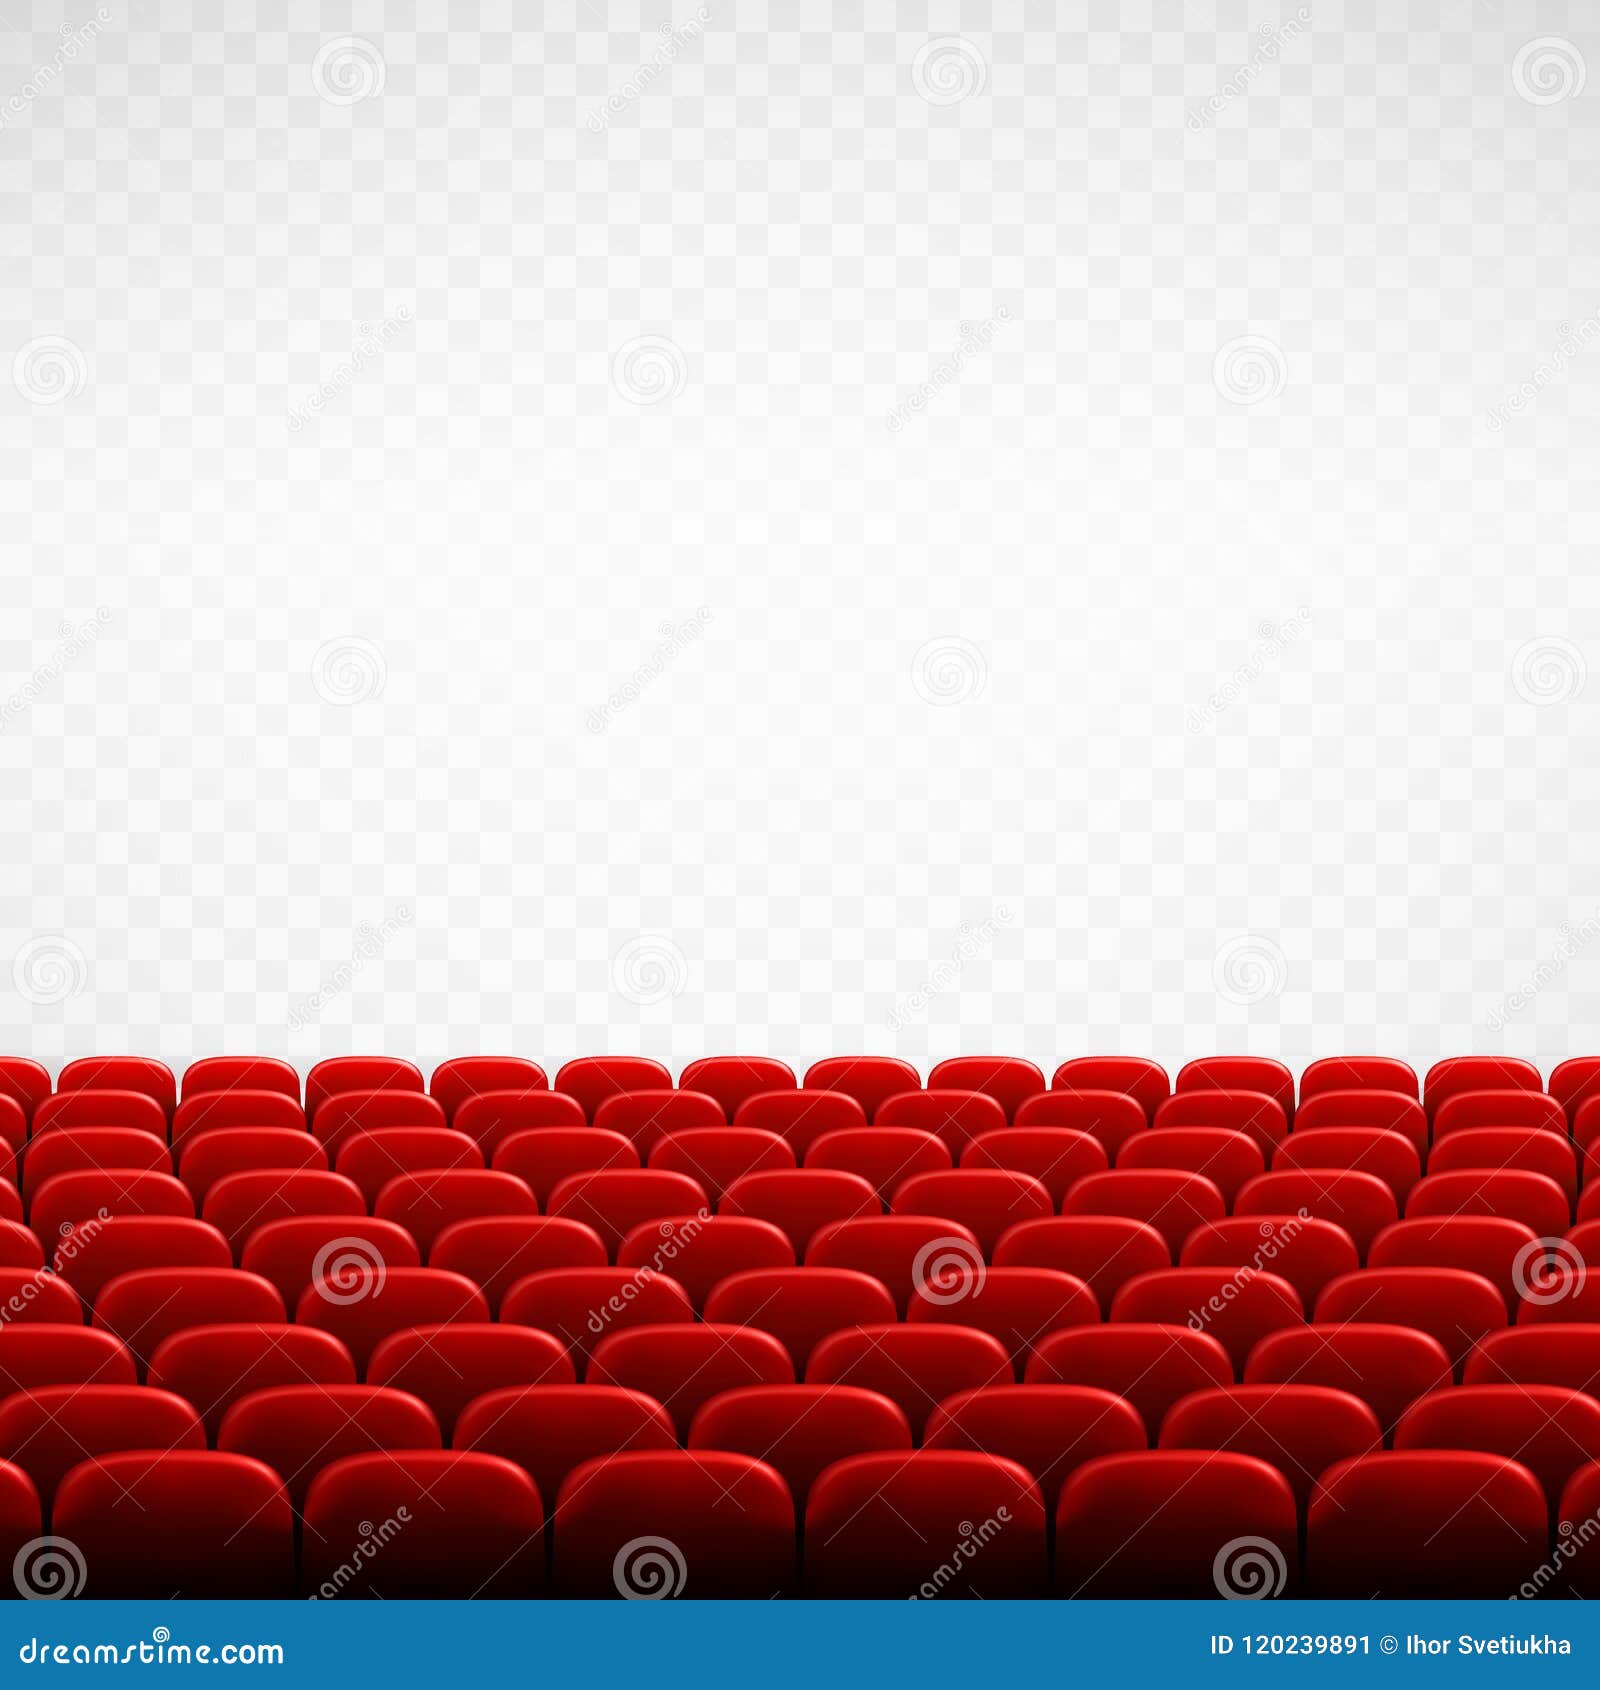 Top 100+ Images auditorium empty movie theater seats background Sharp